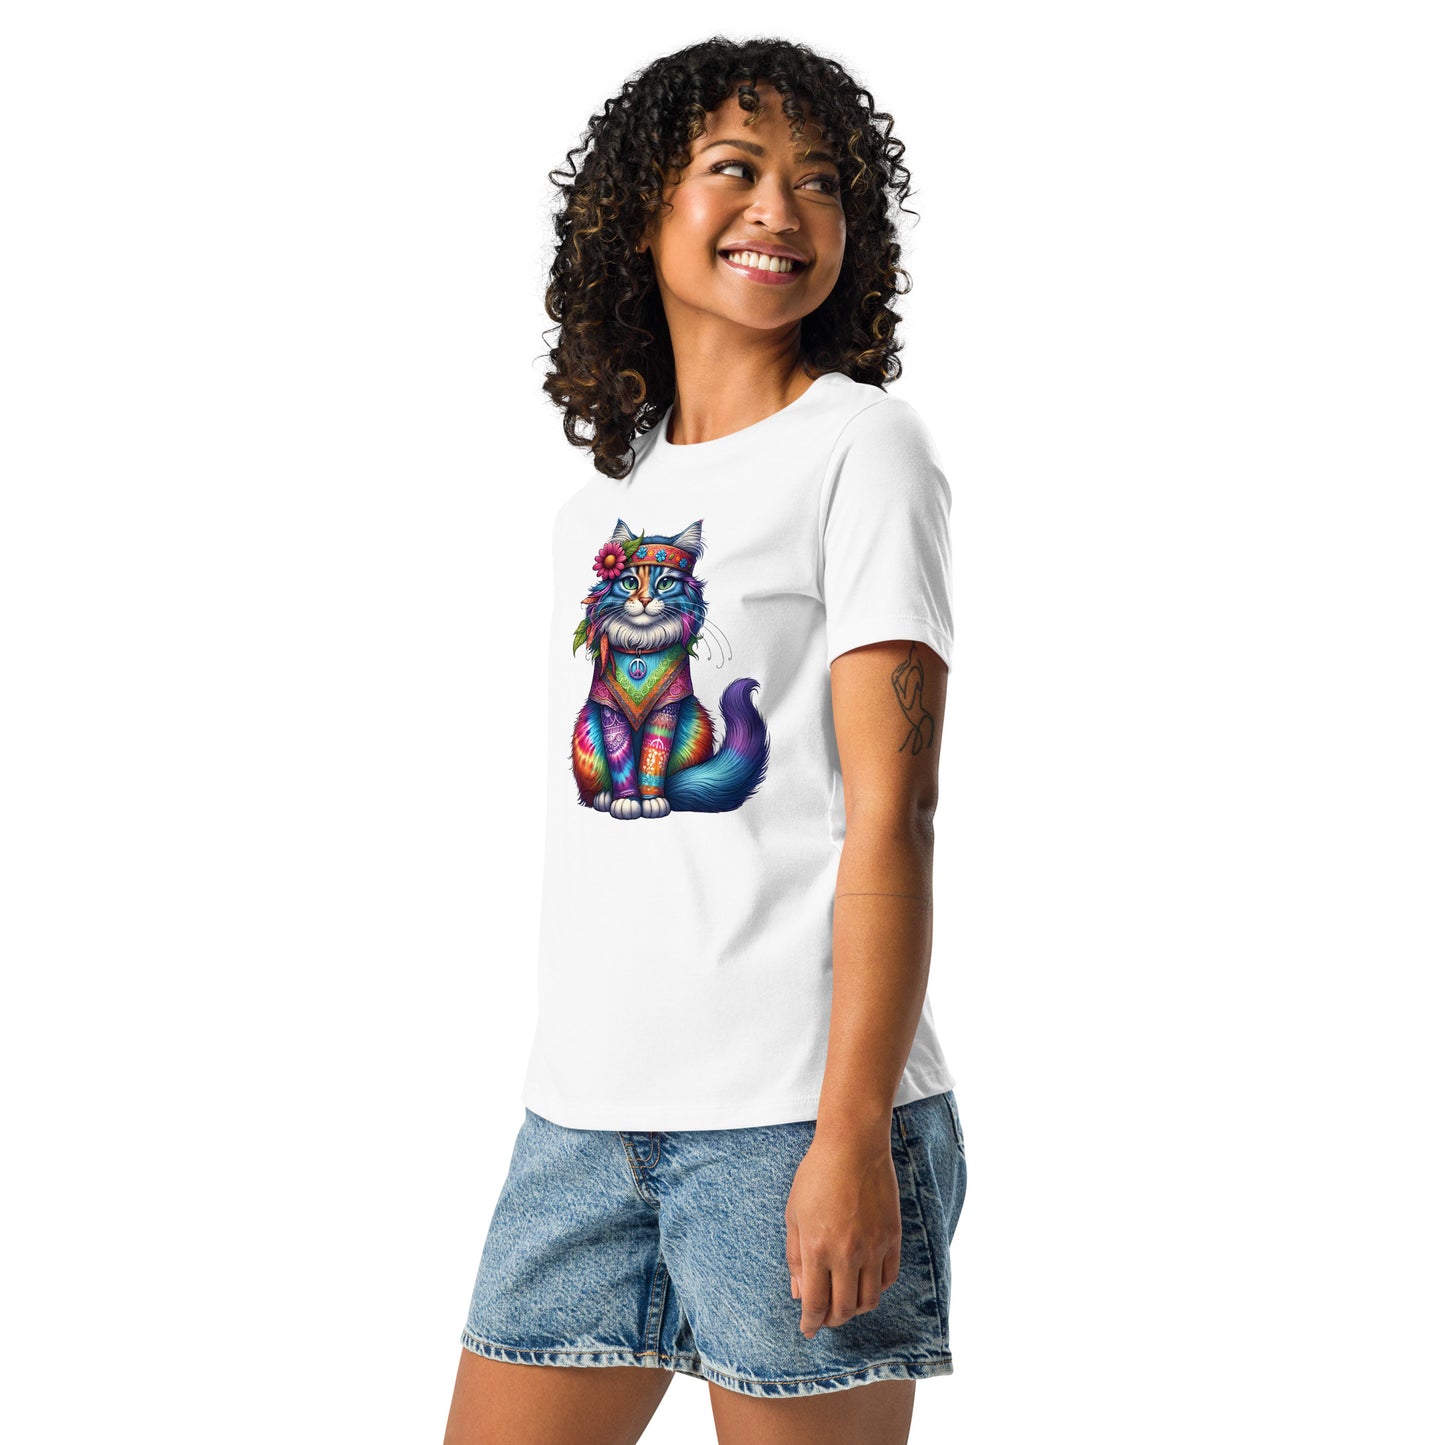 Zen Hippie Cat Women's T-Shirt